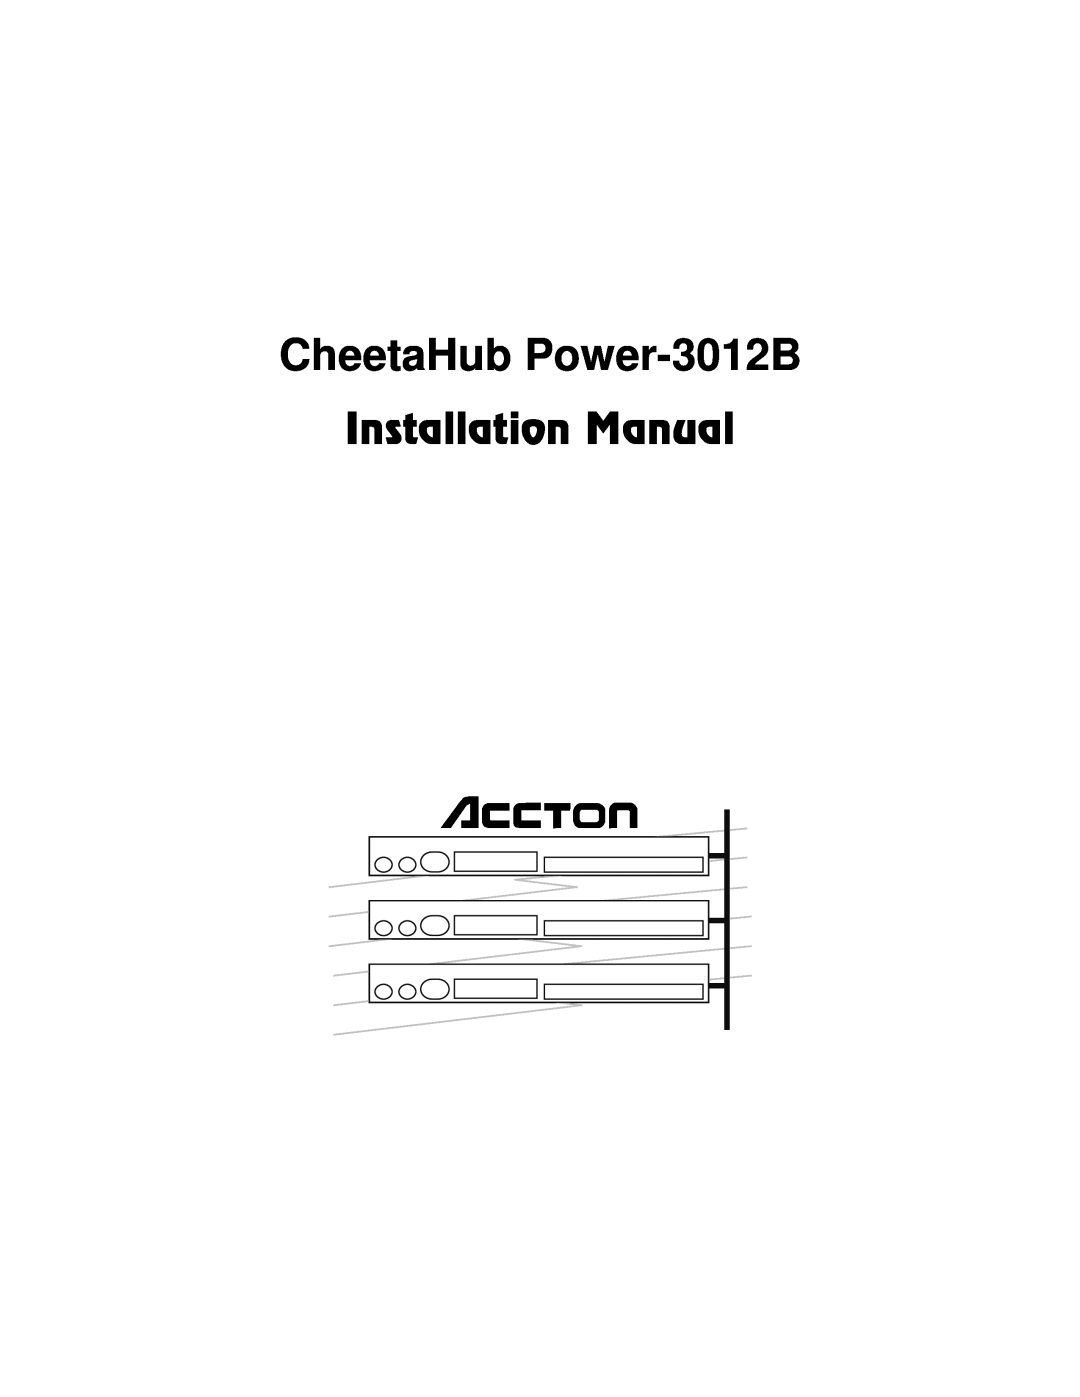 Accton Technology manual CheetaHub Power-3012B, Inoggodji*Ipg 